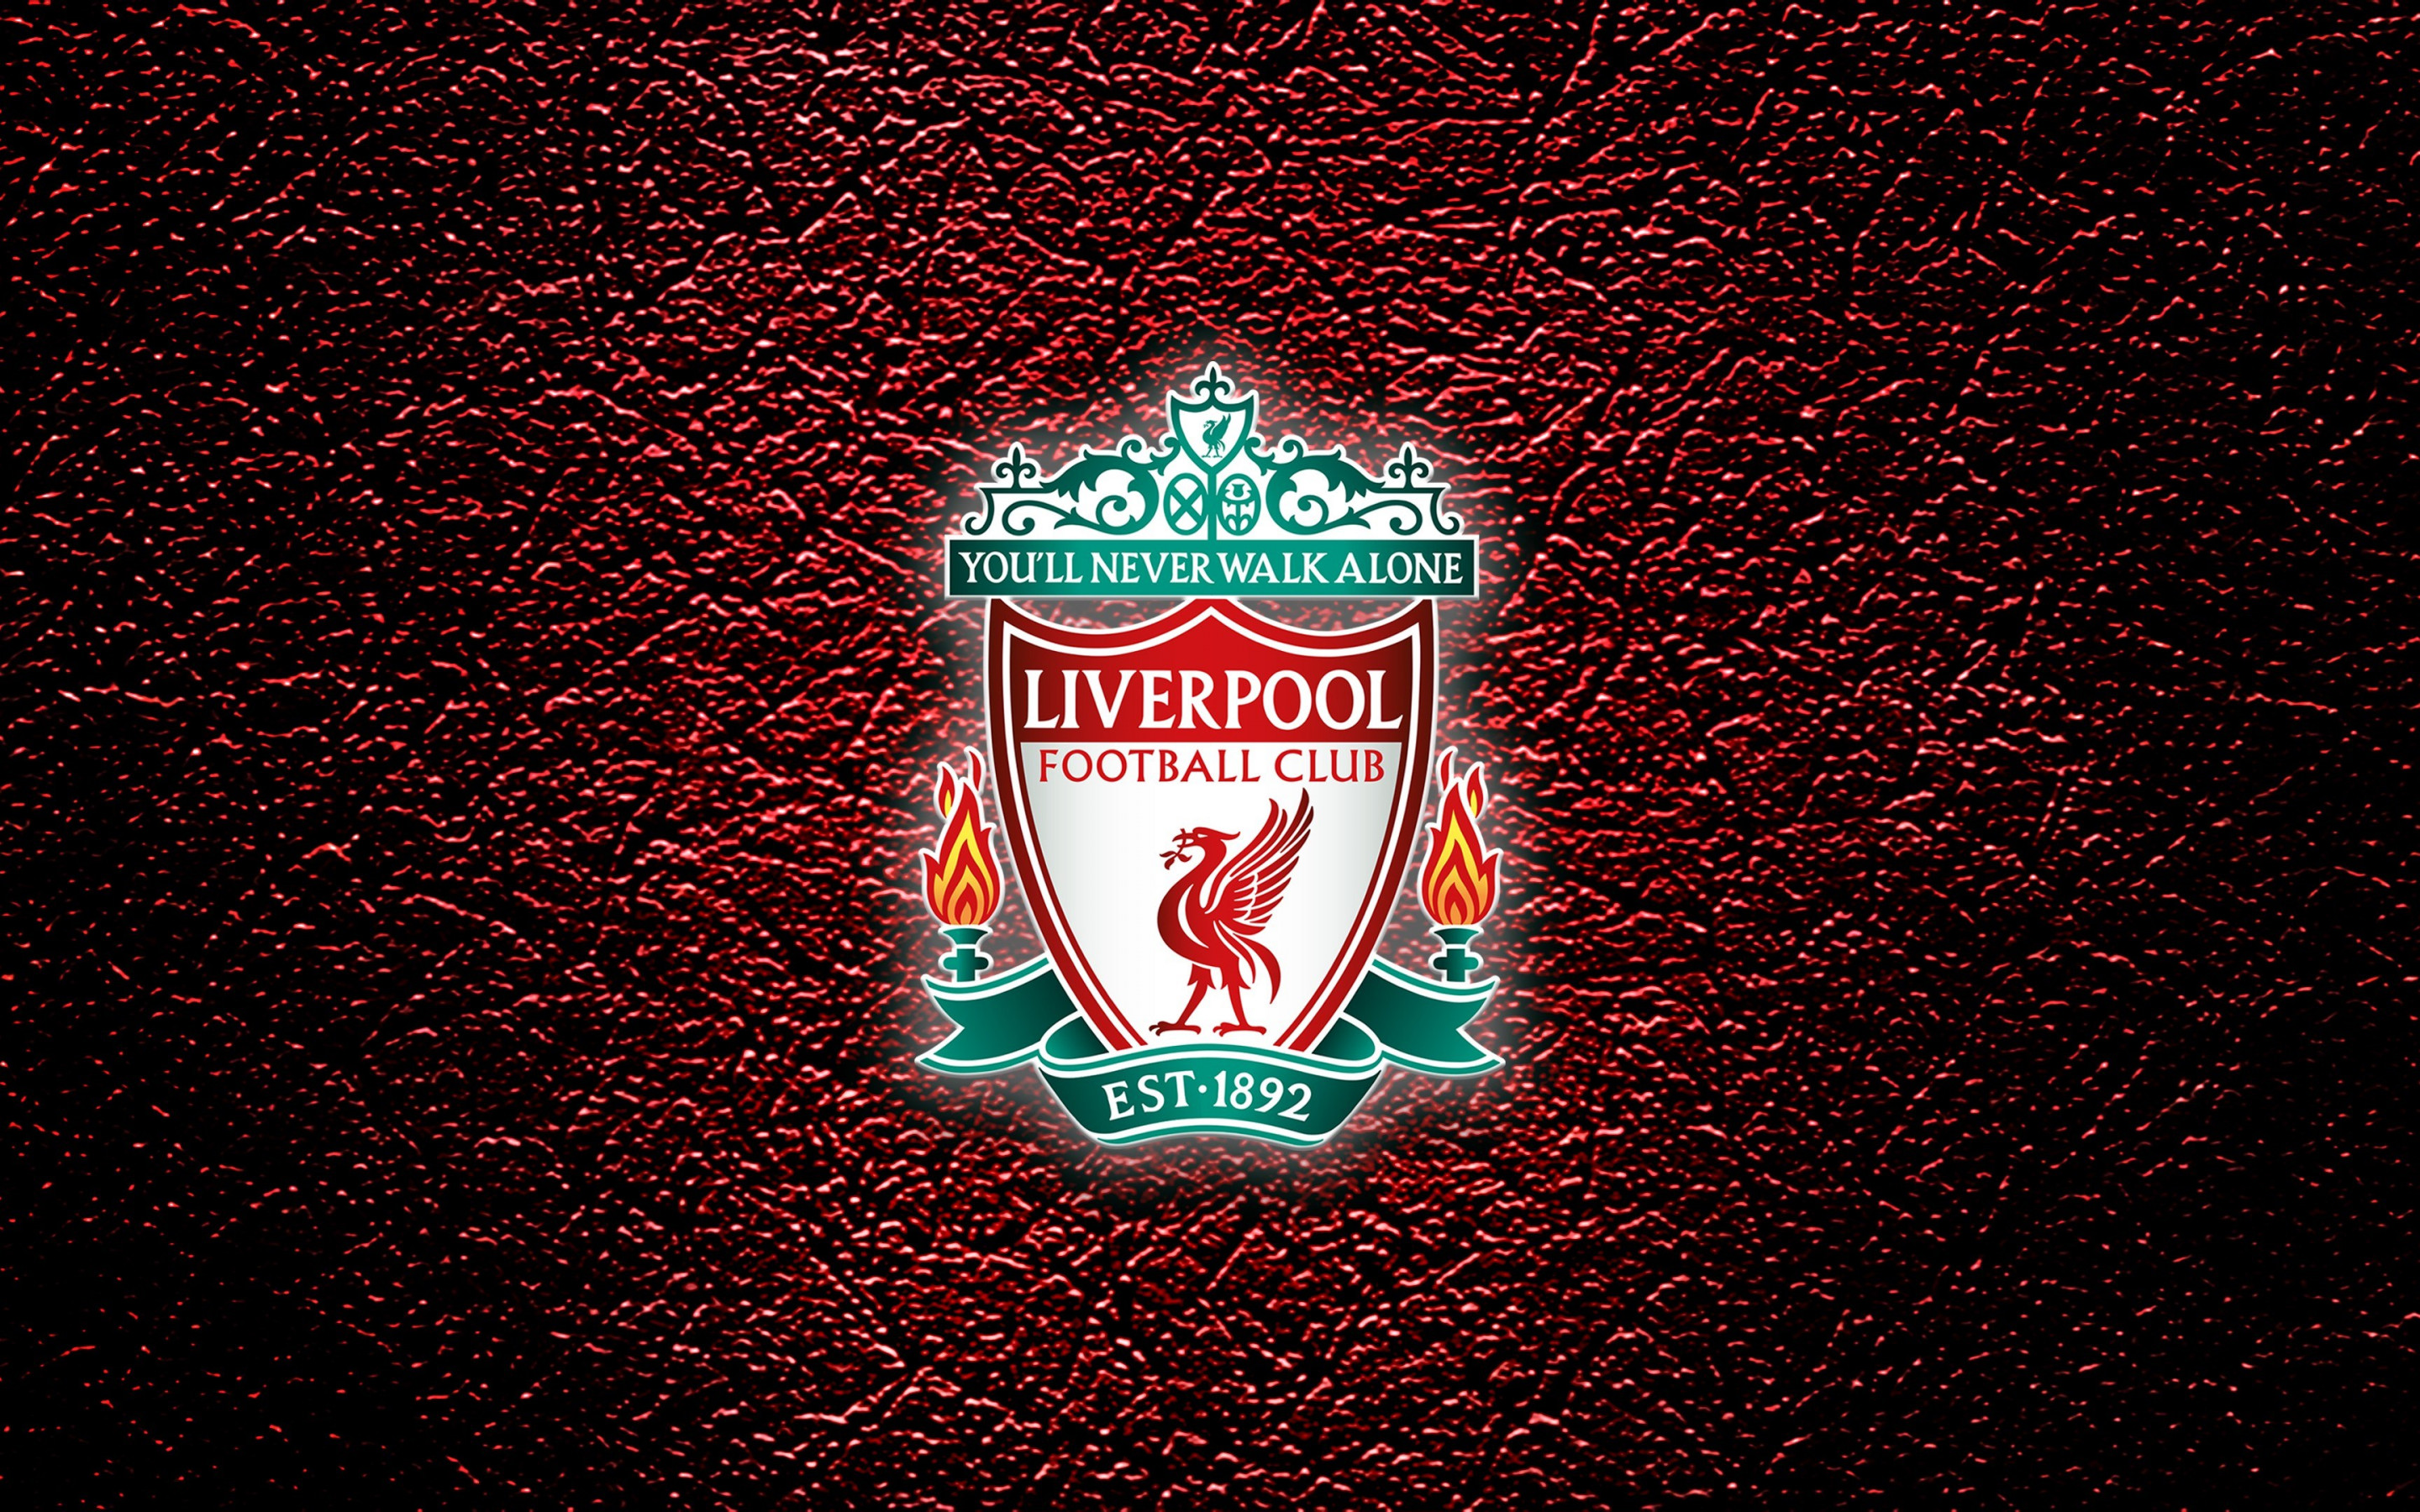 Liverpool - You'll never walk alone wallpaper 2880x1800